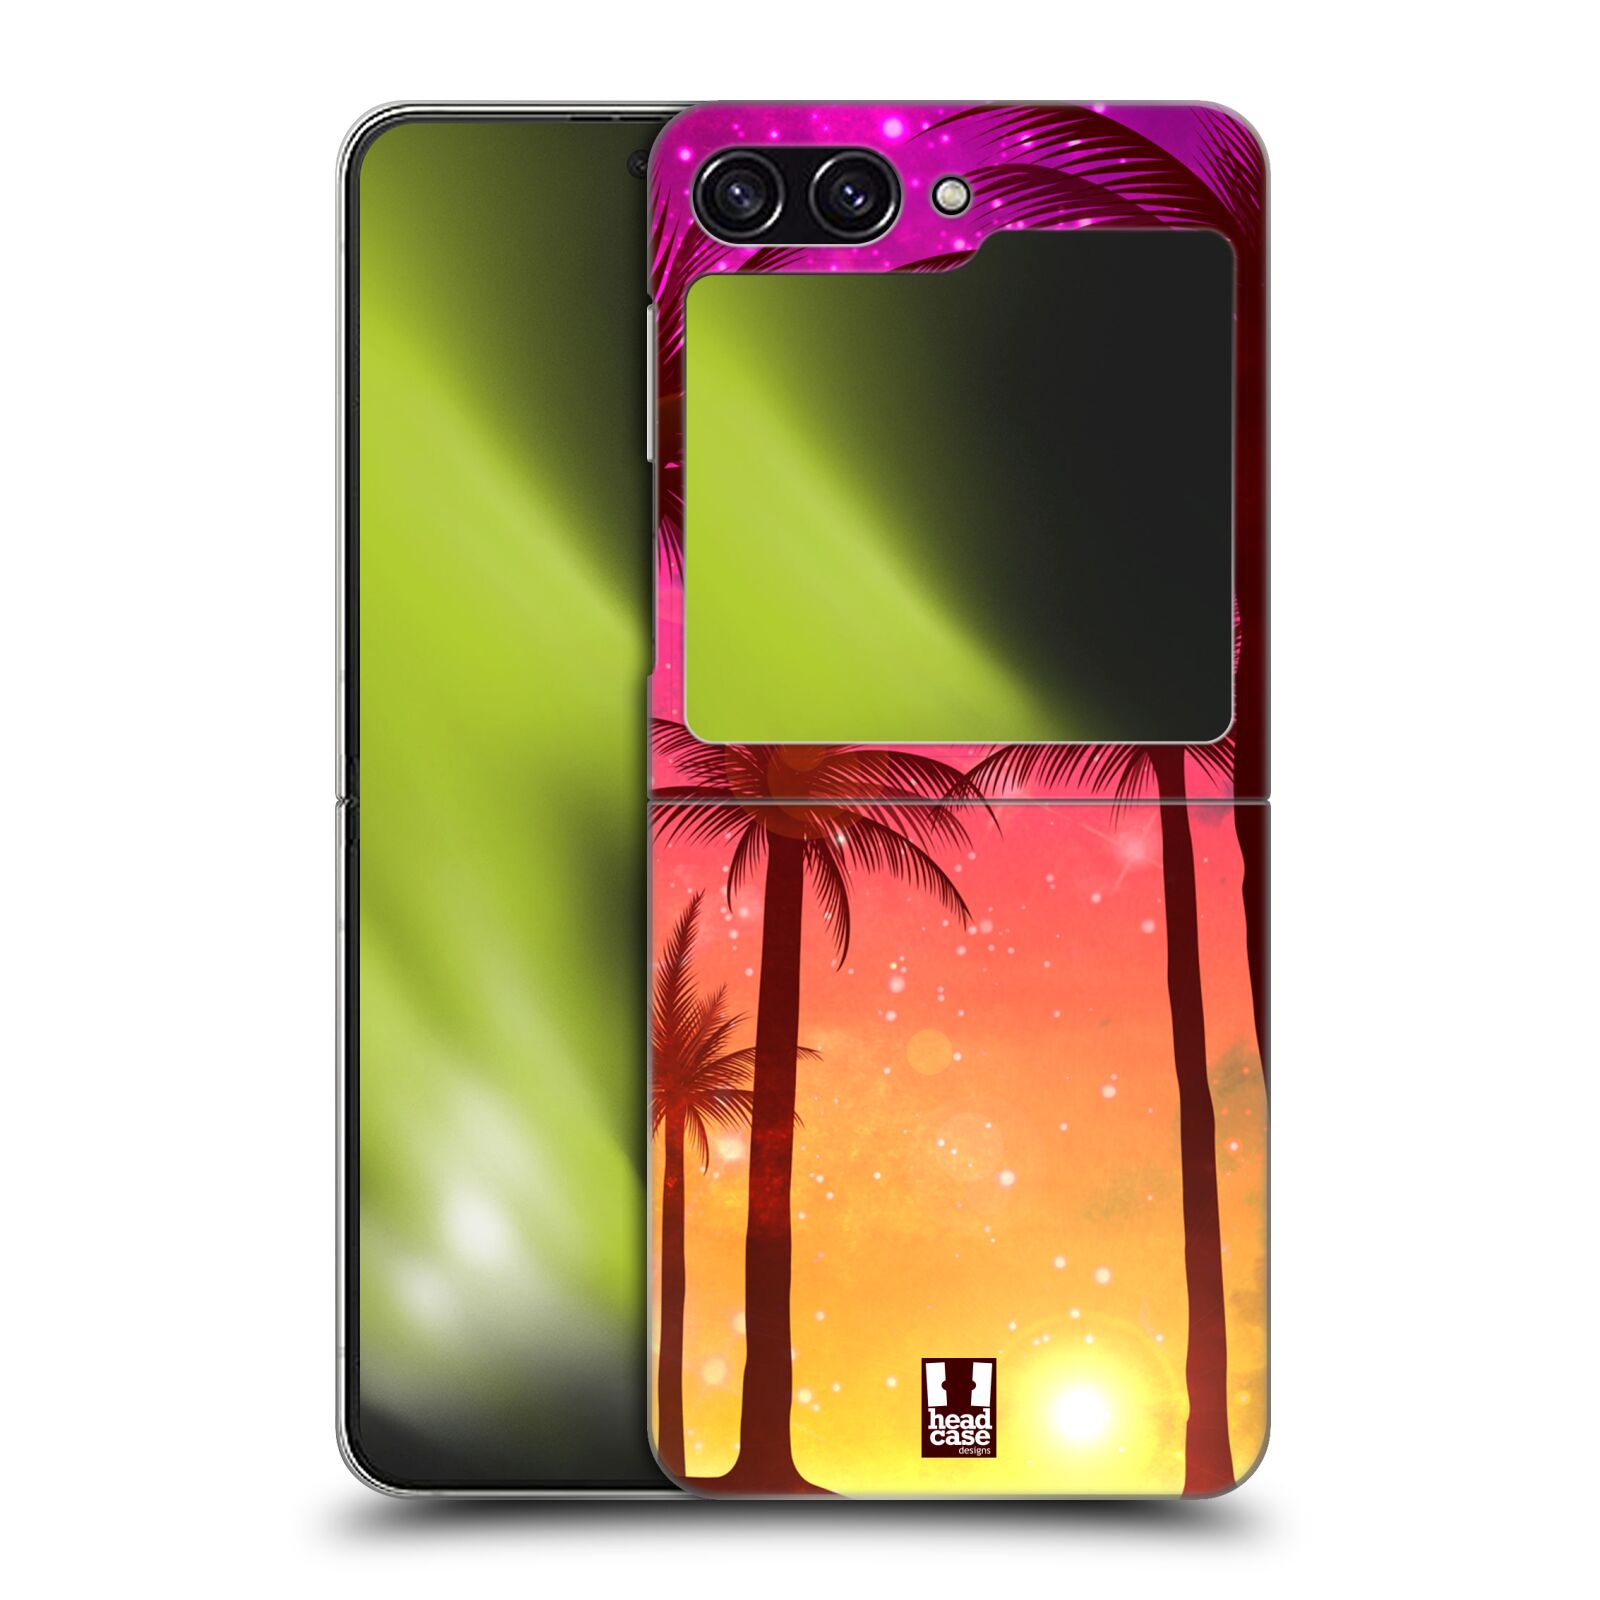 Plastový obal HEAD CASE na mobil Samsung Galaxy Z Flip 5 vzor Kreslený motiv silueta moře a palmy RŮŽOVÁ